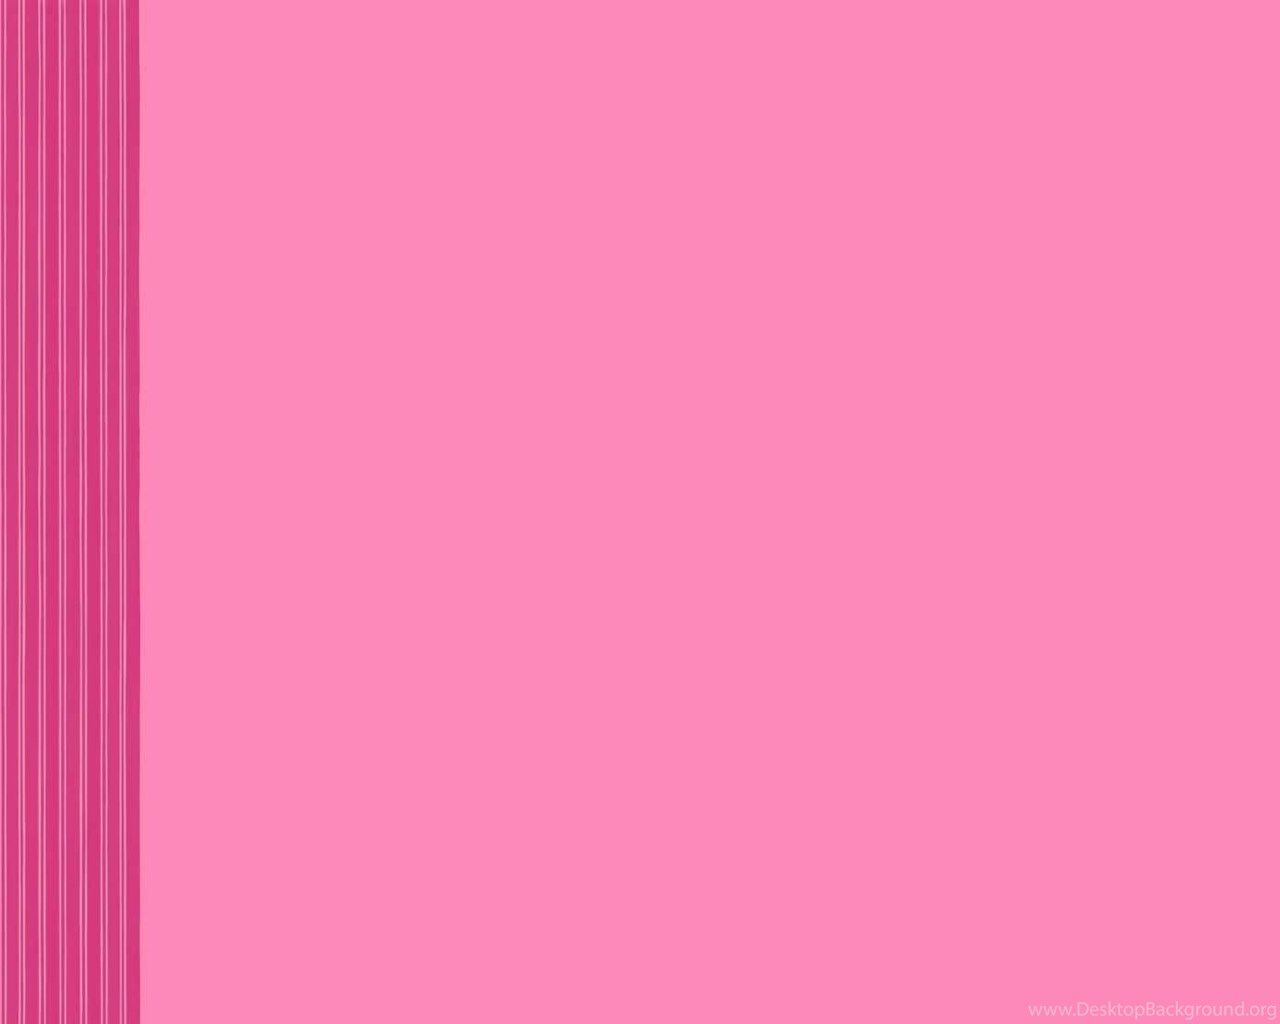 Bubblegum Pink Free PPT Background For Your PowerPoint Desktop Background